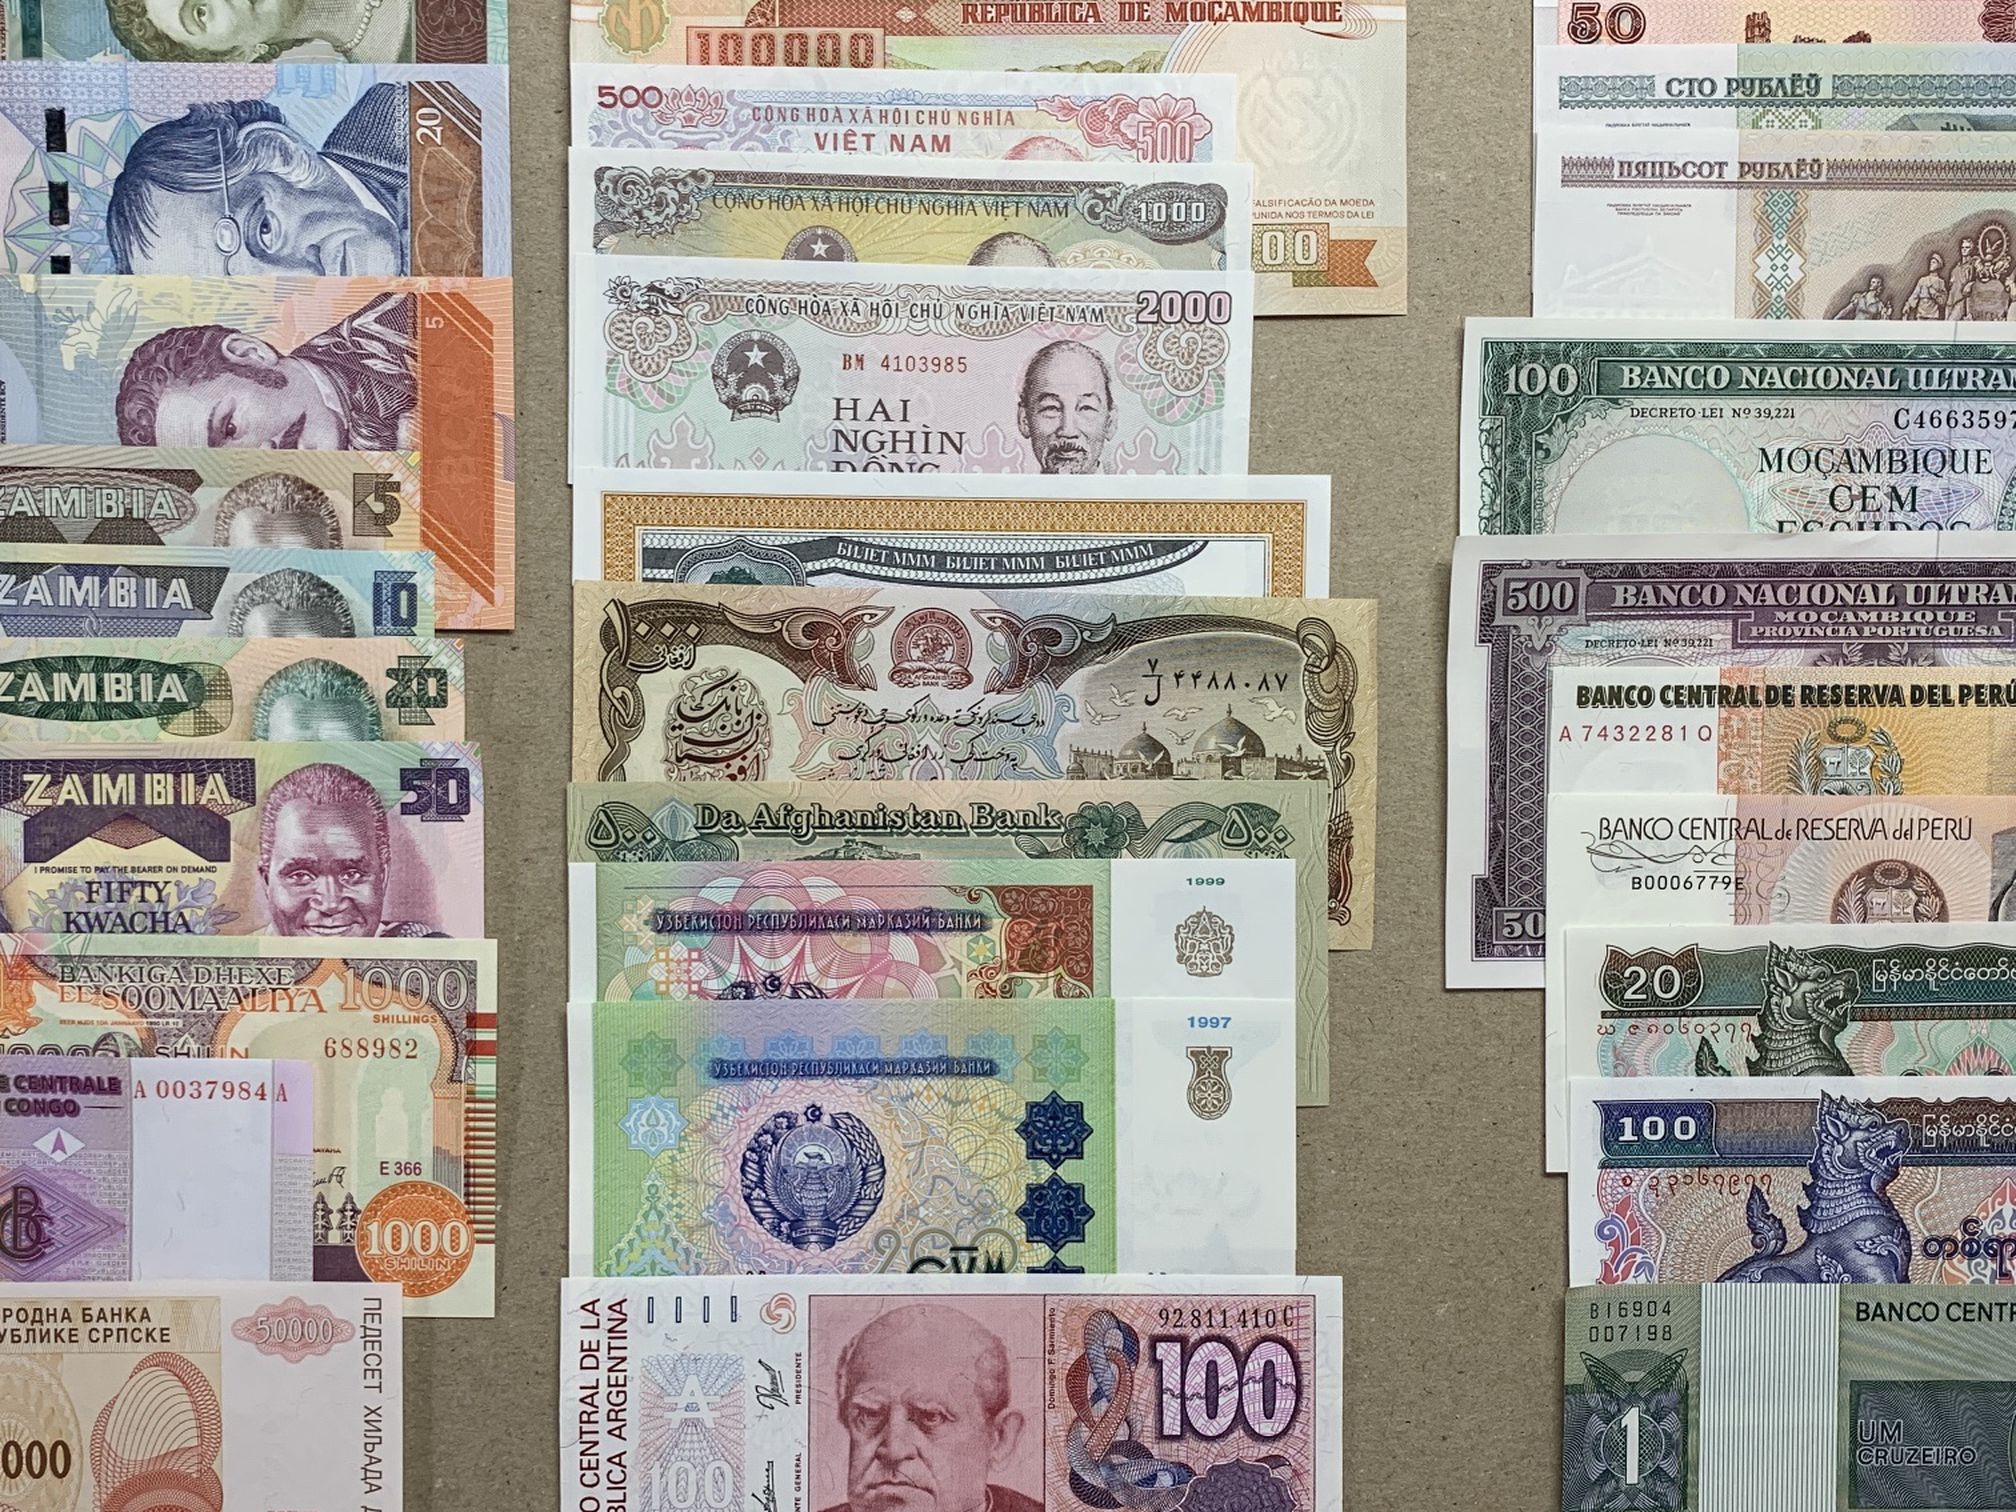 67 PCS World Banknote Currency Set. Venezuela (5), Zambia (6), Somalia, Congo, Bosnia, Mozambique (4), Vietnam (3), Russia, Afghanistan (2), Uzbekista